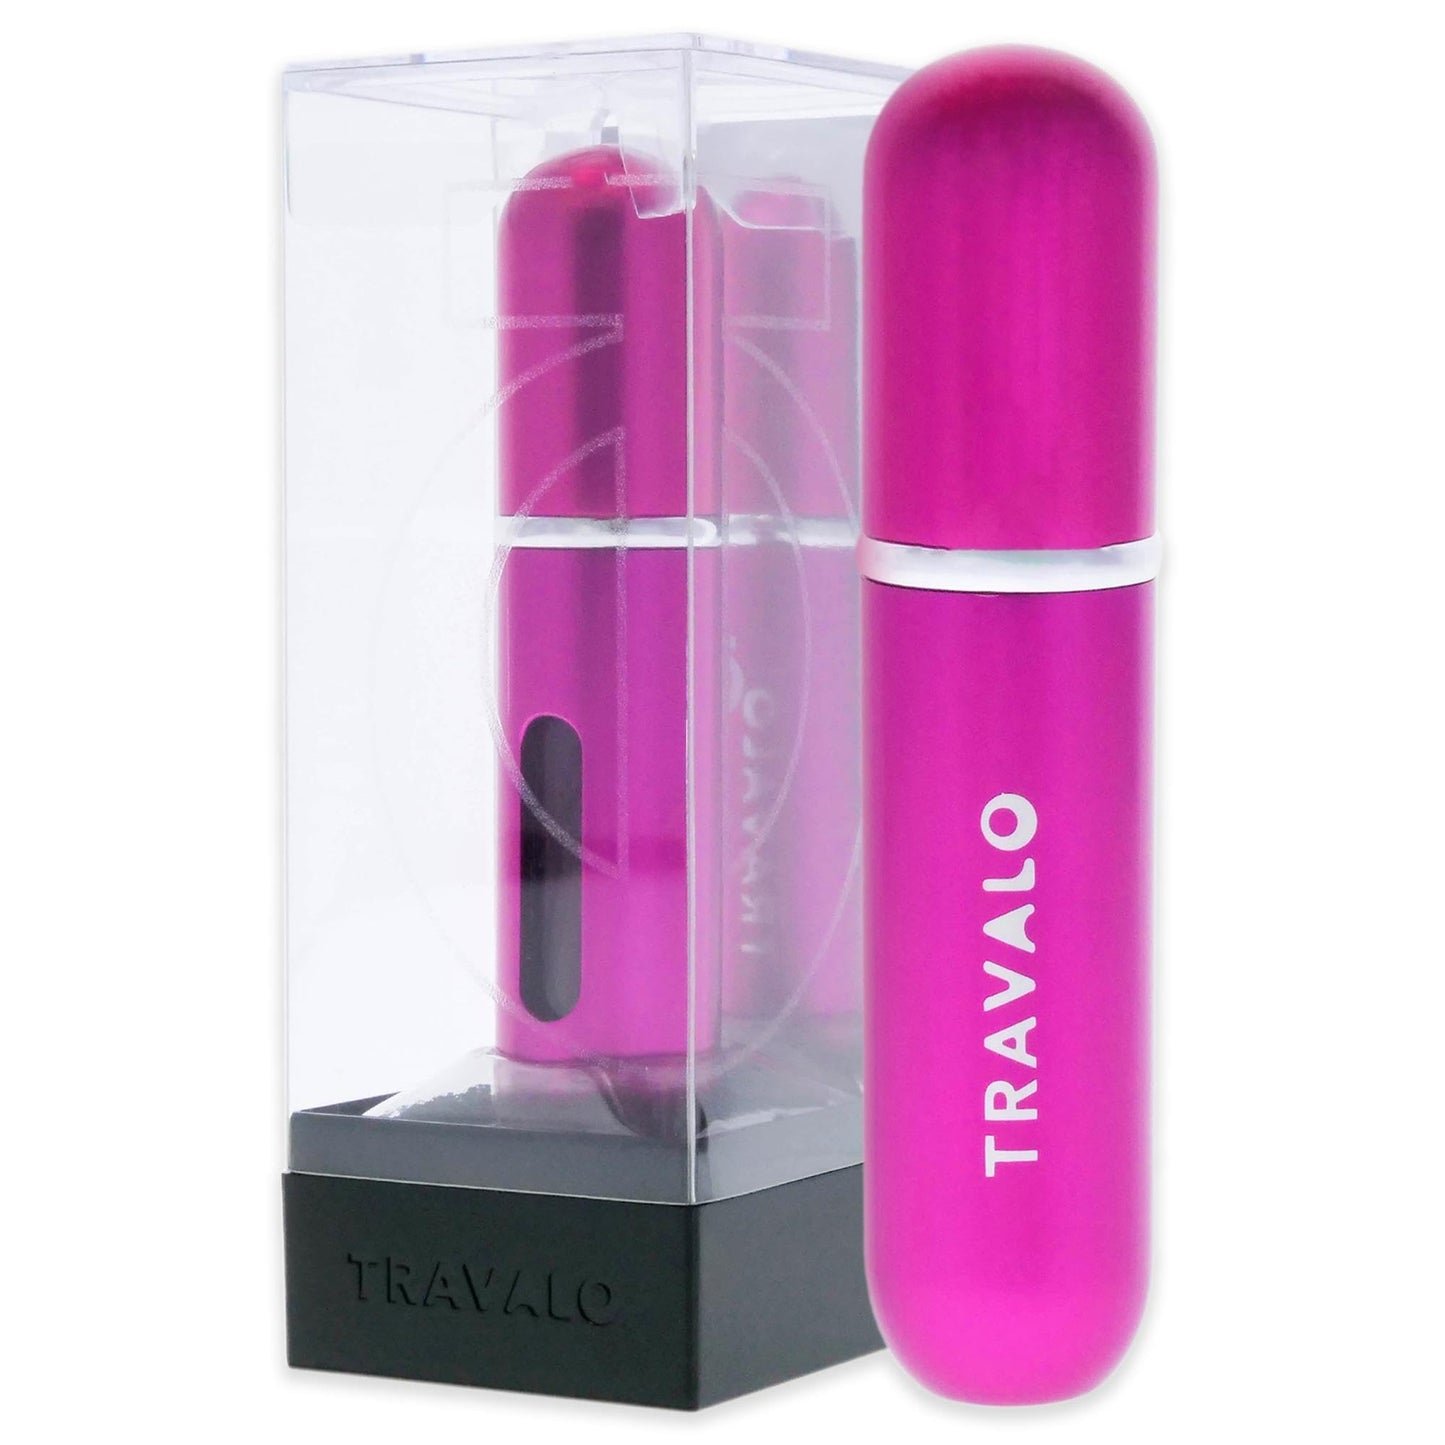 Travalo Classic Perfume Atomizer - U refill system - Elegant Metal Travel Atomiser - TSA Flight Approved Portable Mini Refillable Empty spray Bottle - Glass-free Scent Pump Case - Pink 0.17 oz / 5ml